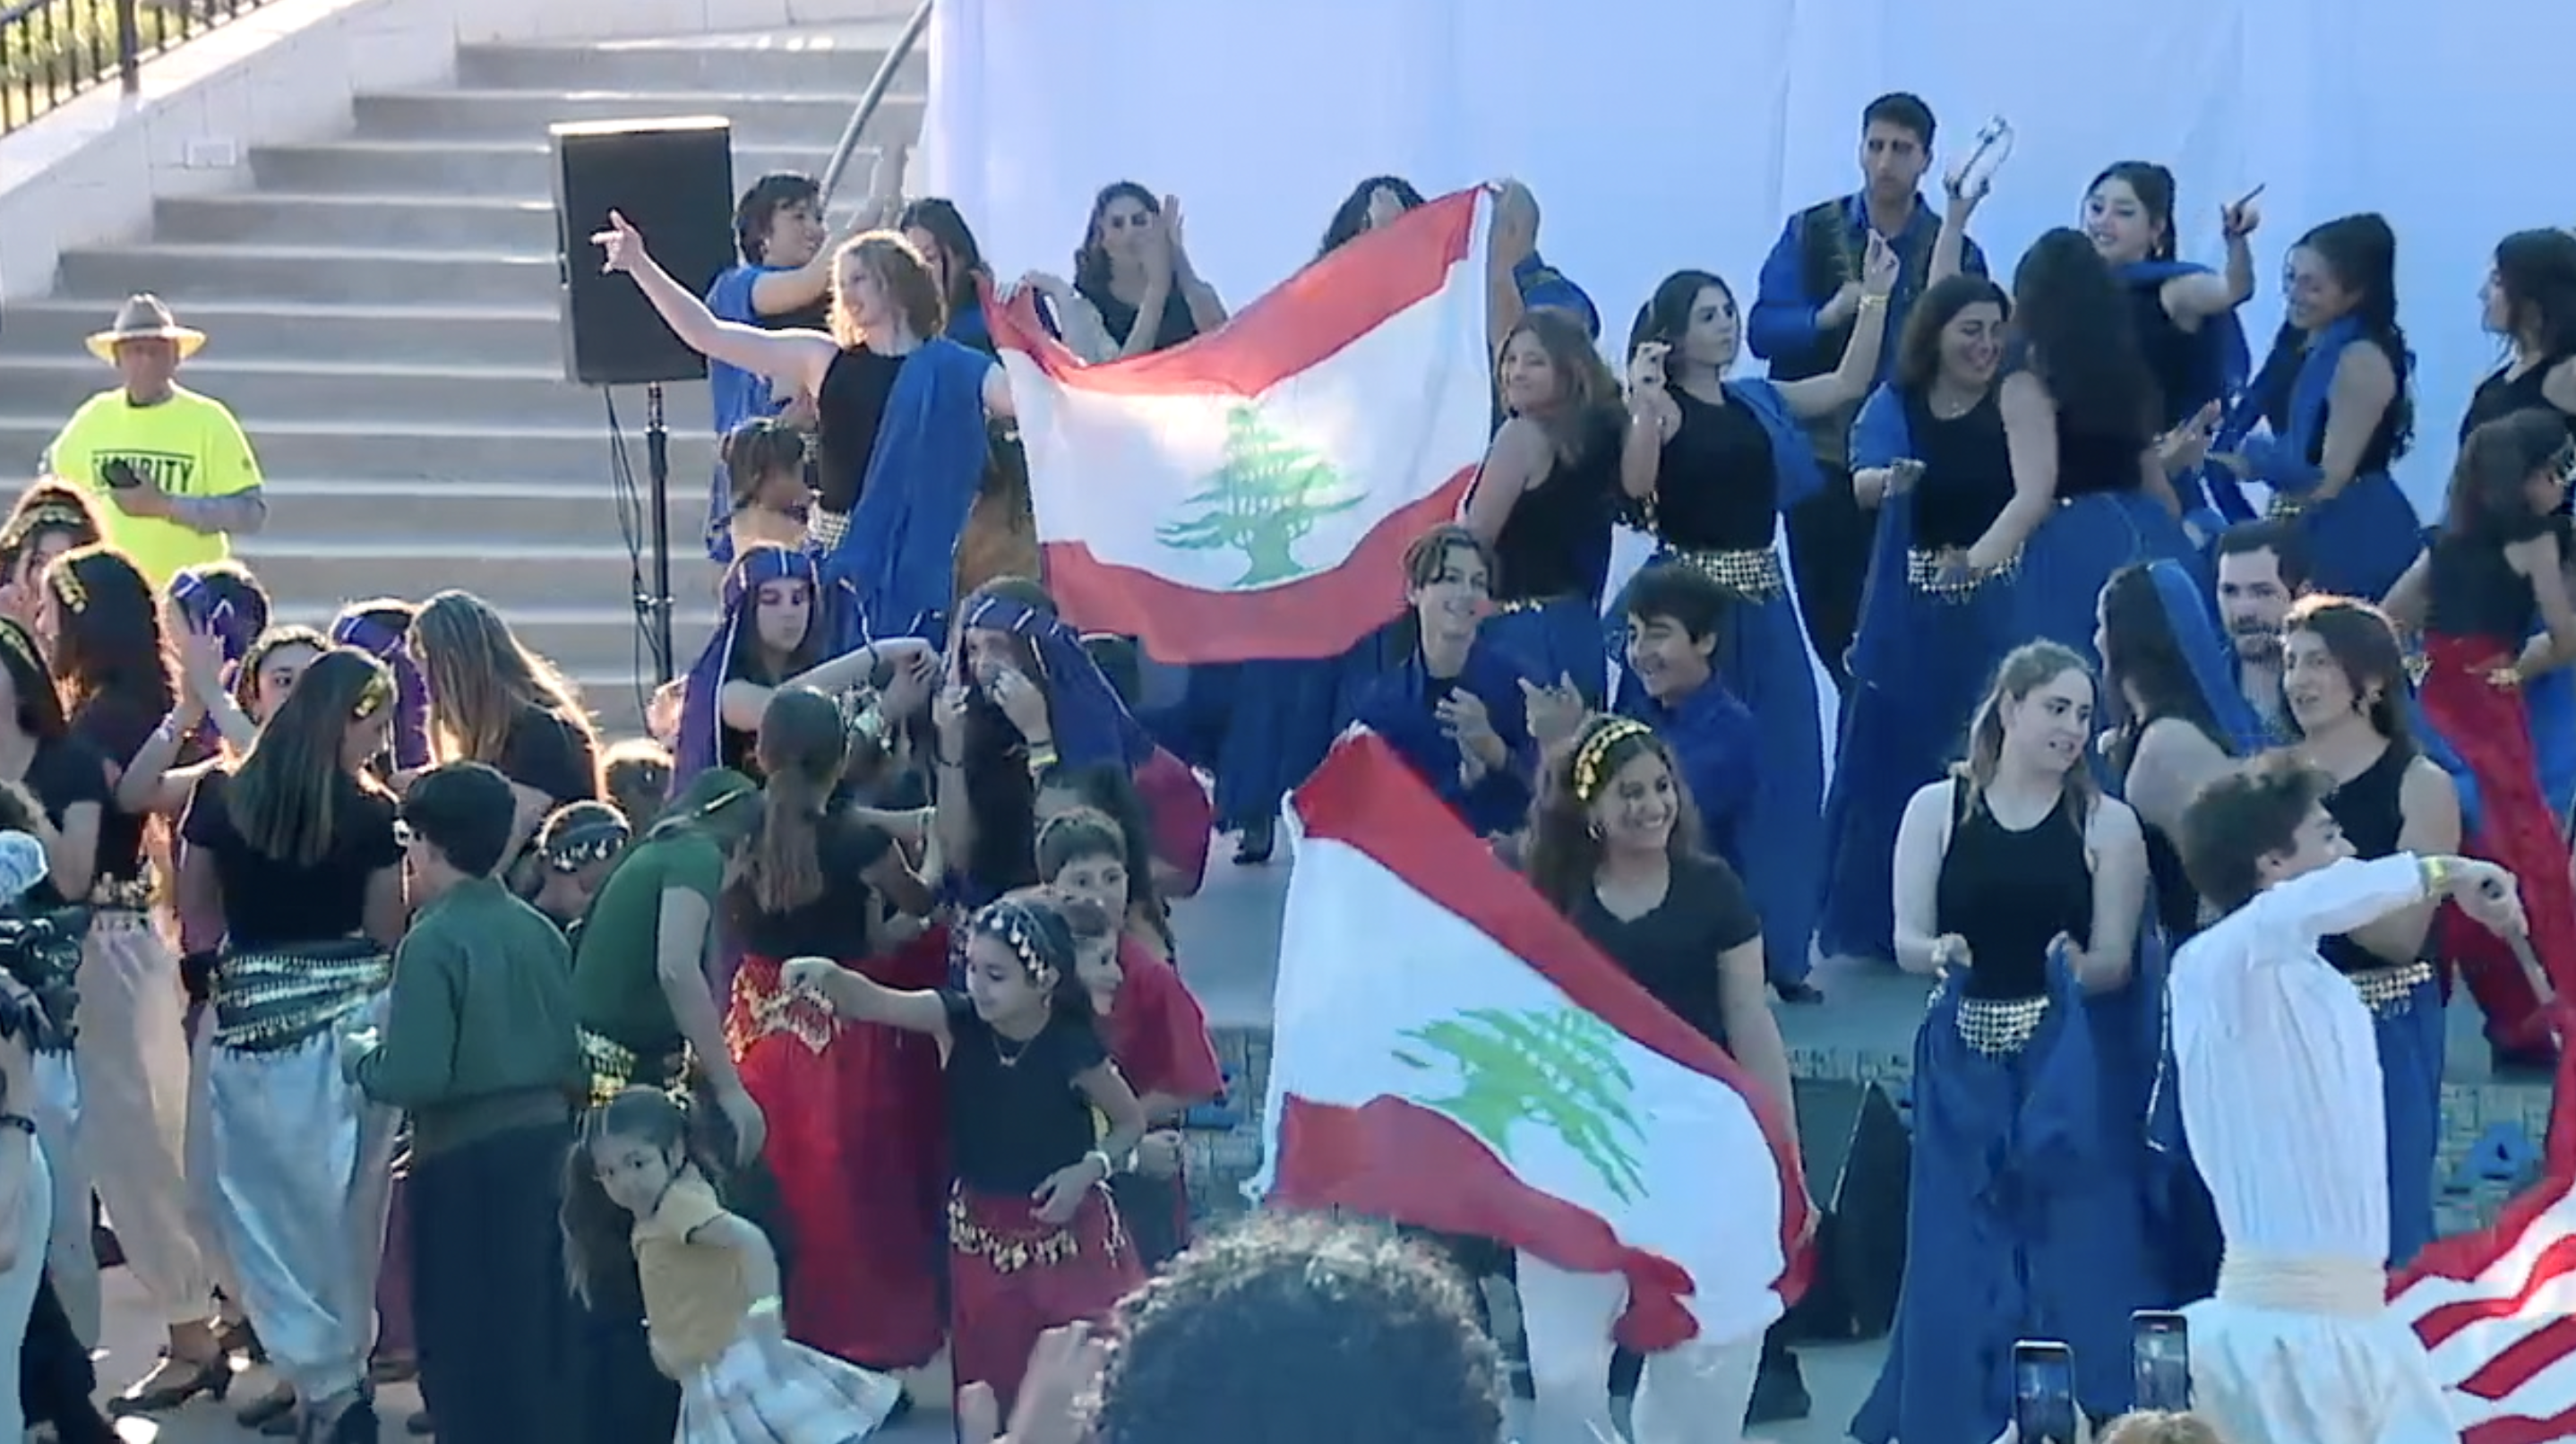 20 years of the Lebanese Festival in El Cajon